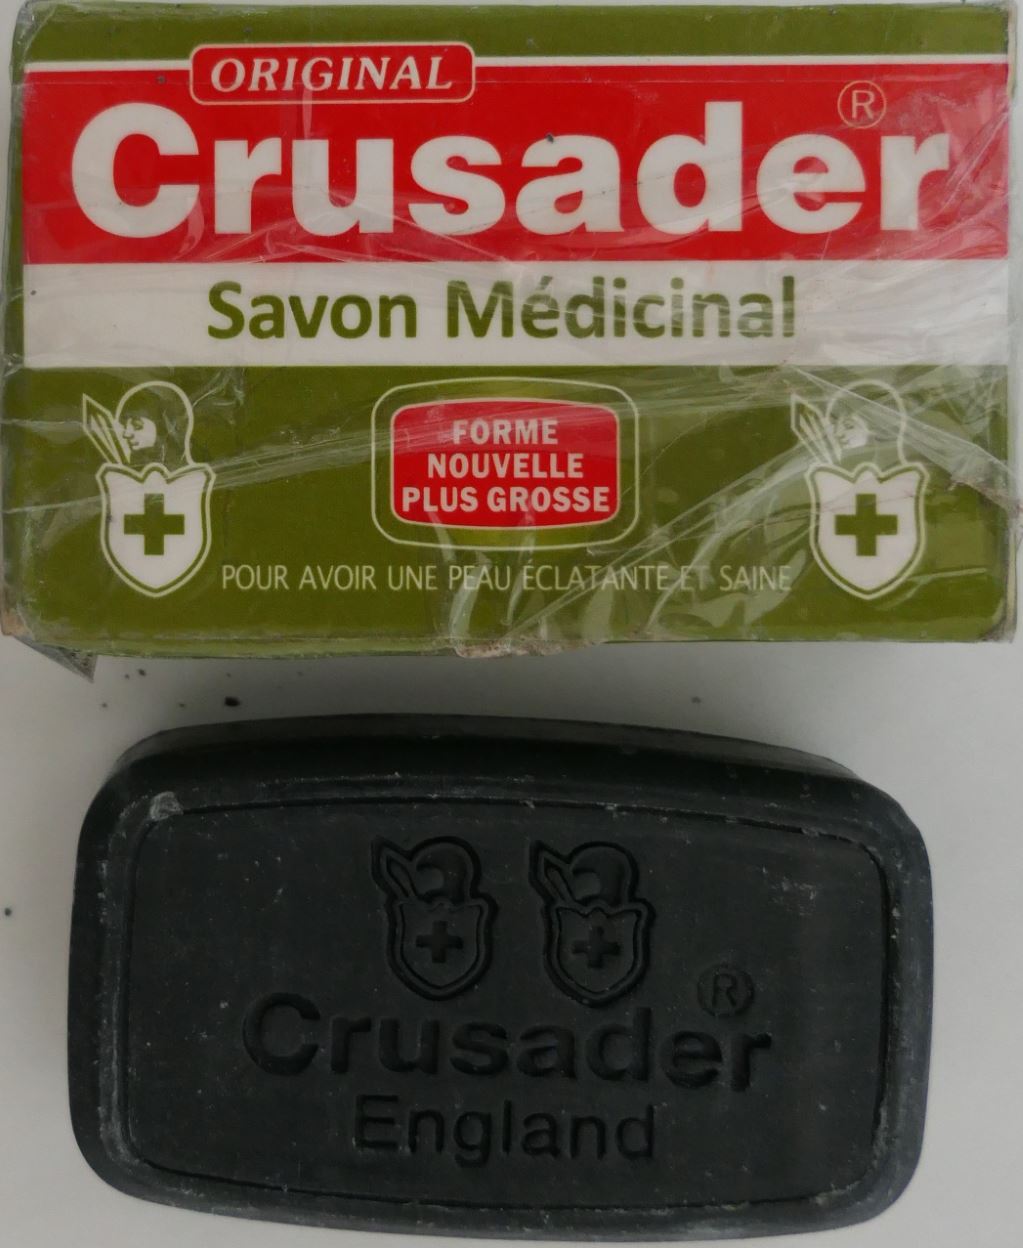 Crusader Savon Médicinal - Illegales Präsentationsarzneimittel (illegal medicinal product by presentation)